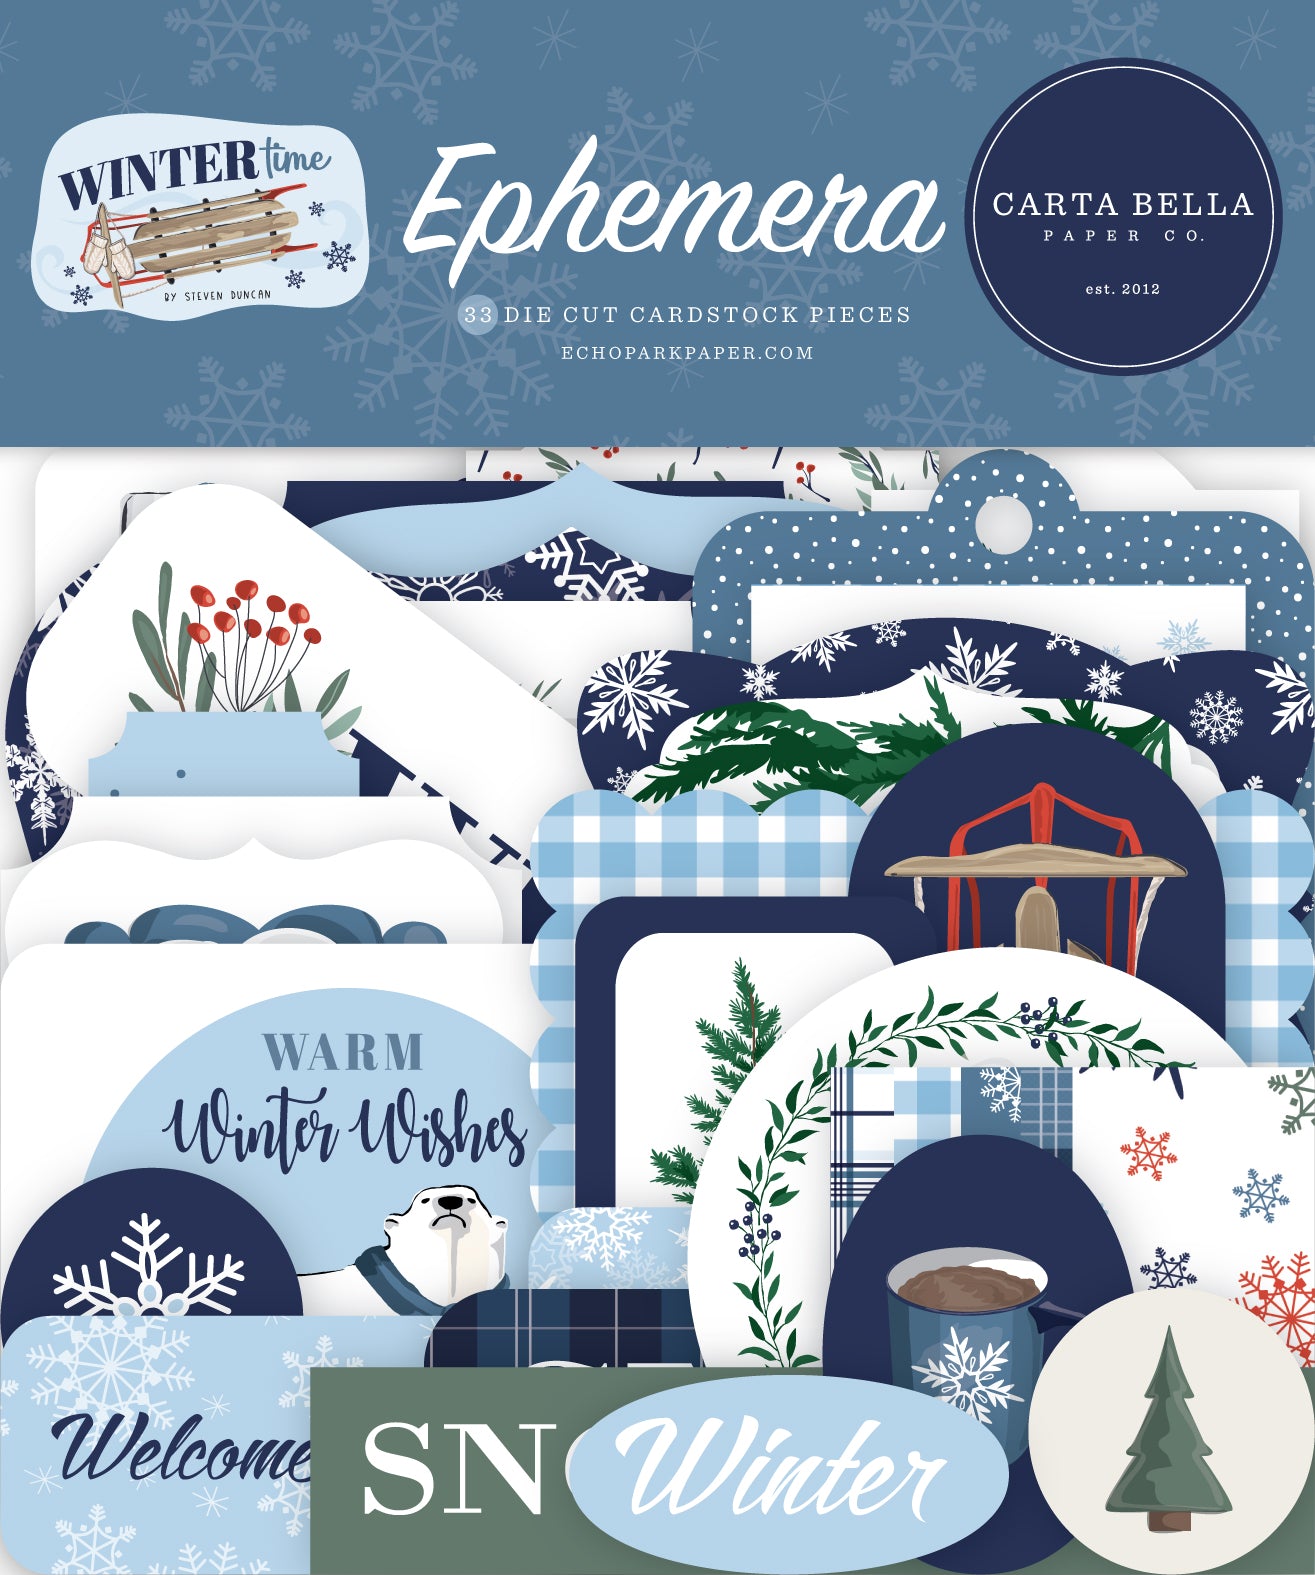 Wintertime Collection 5 x 5 Scrapbook Ephemera by Carta Bella